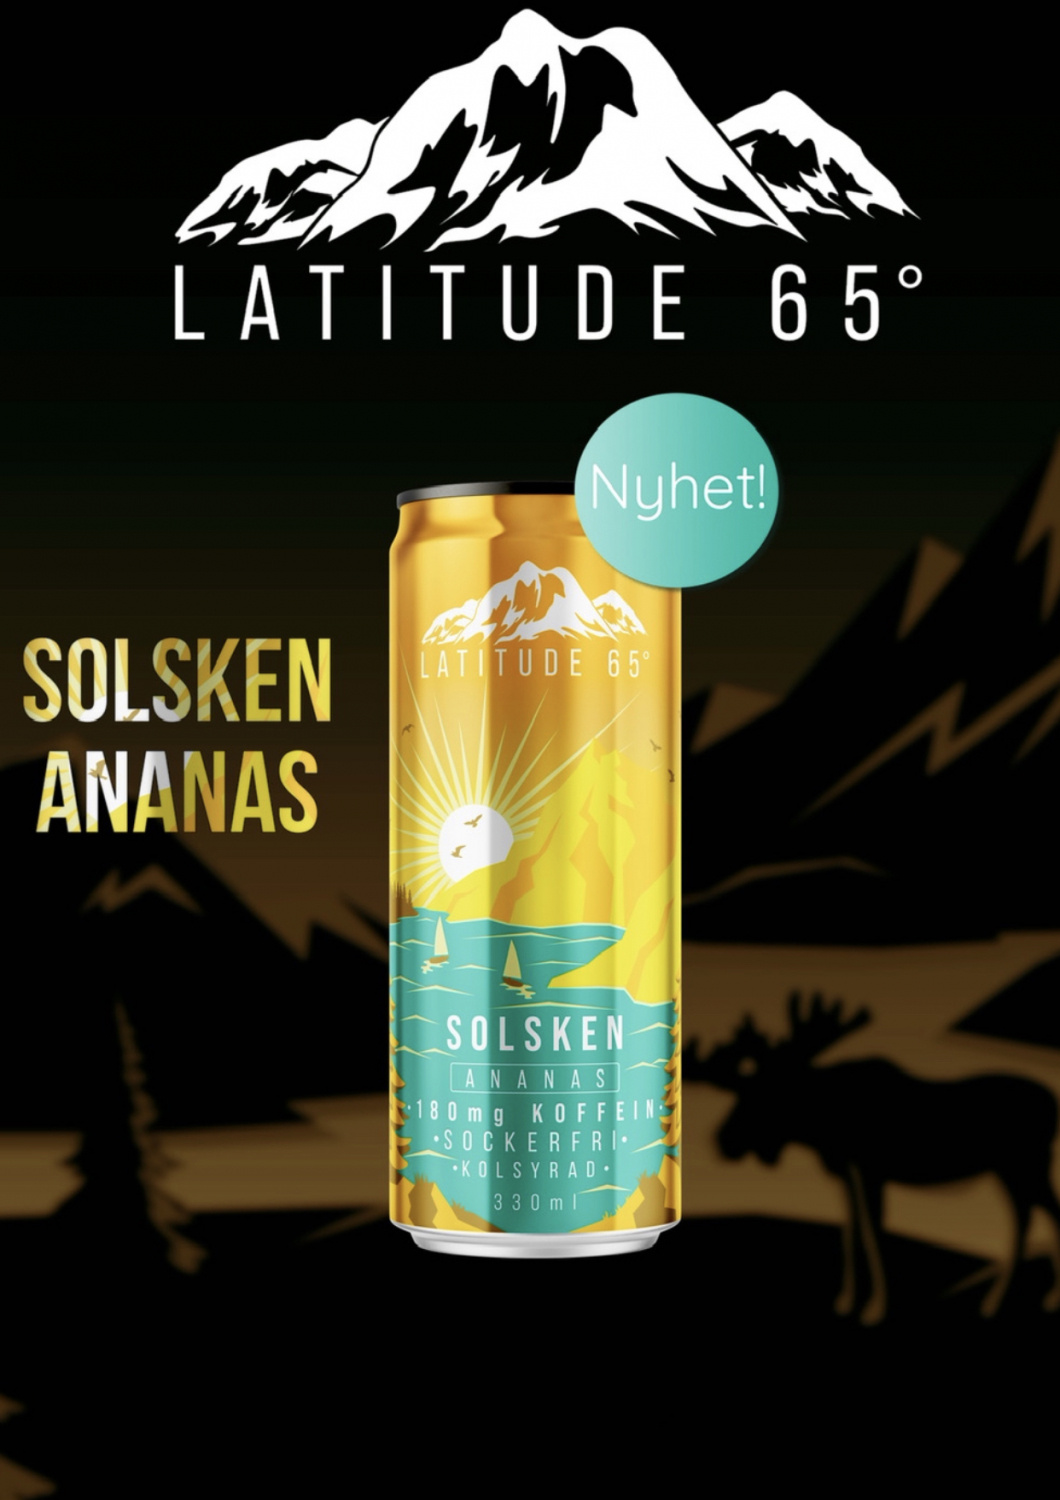 Latitude 65, 330ml - Solsken